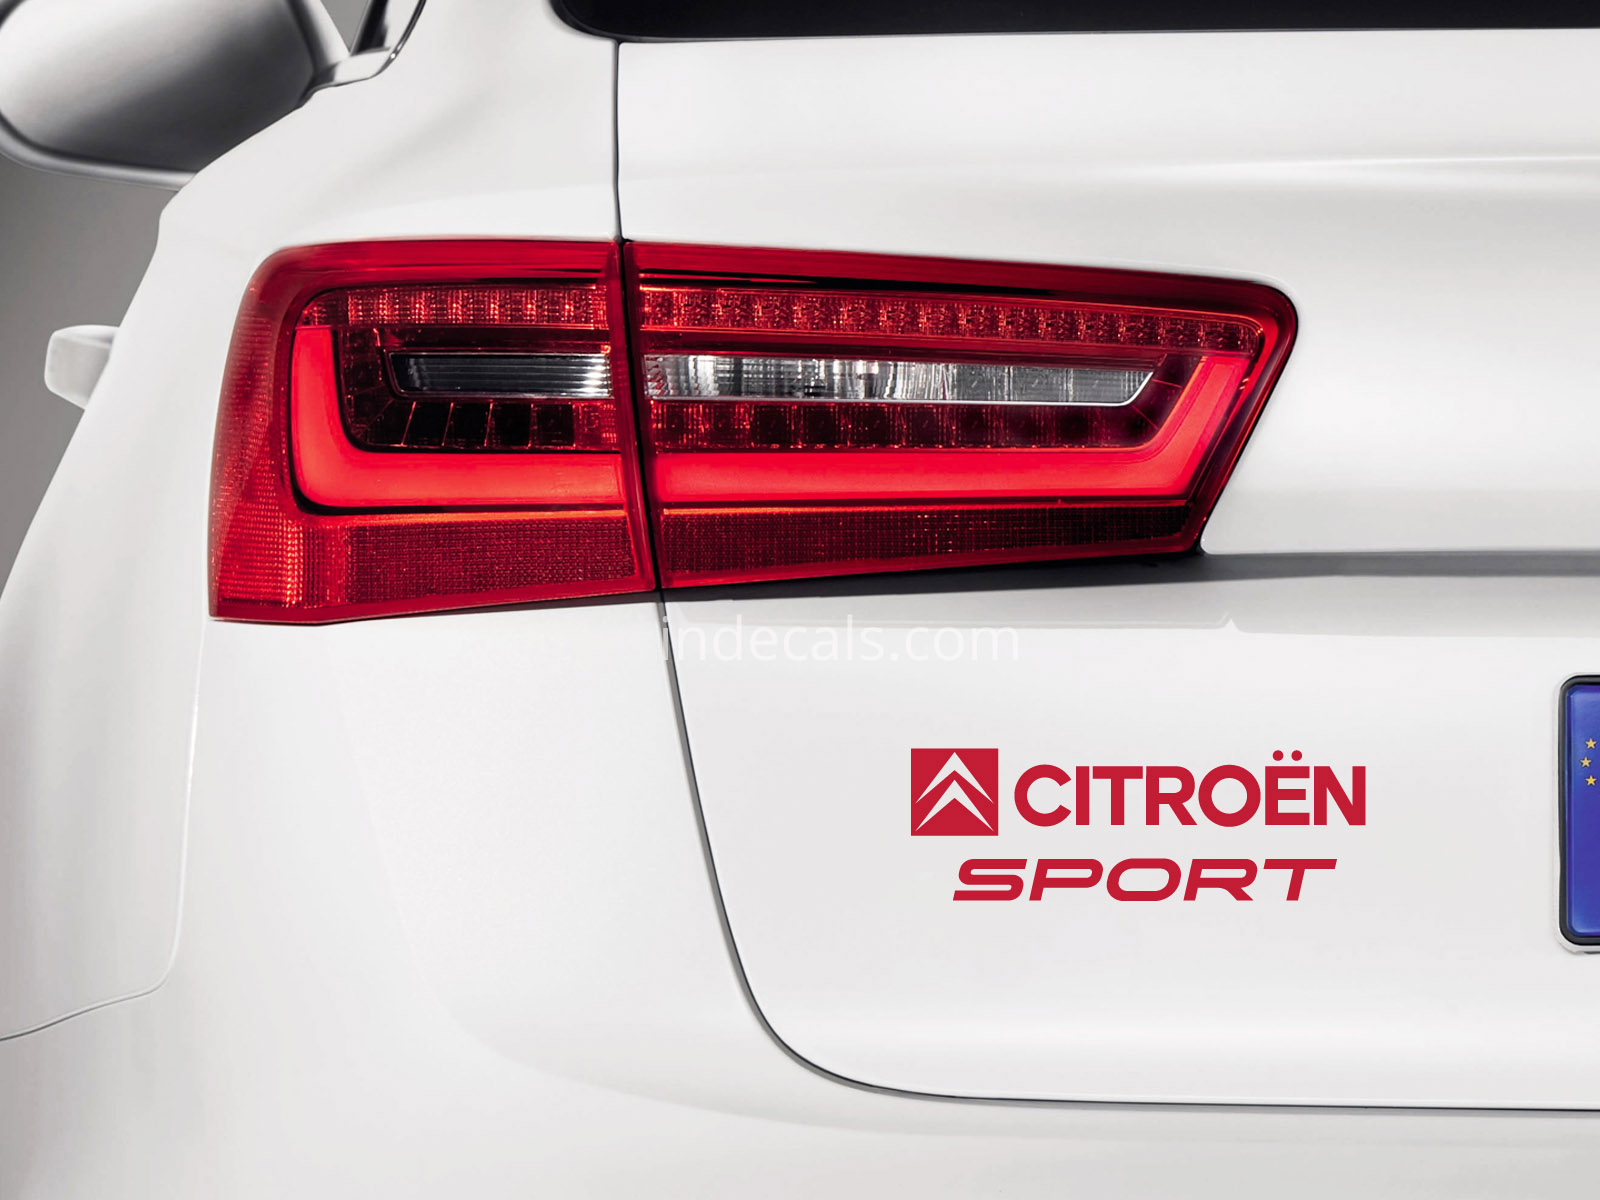 1 x Citroen Sports Sticker for Trunk - Red